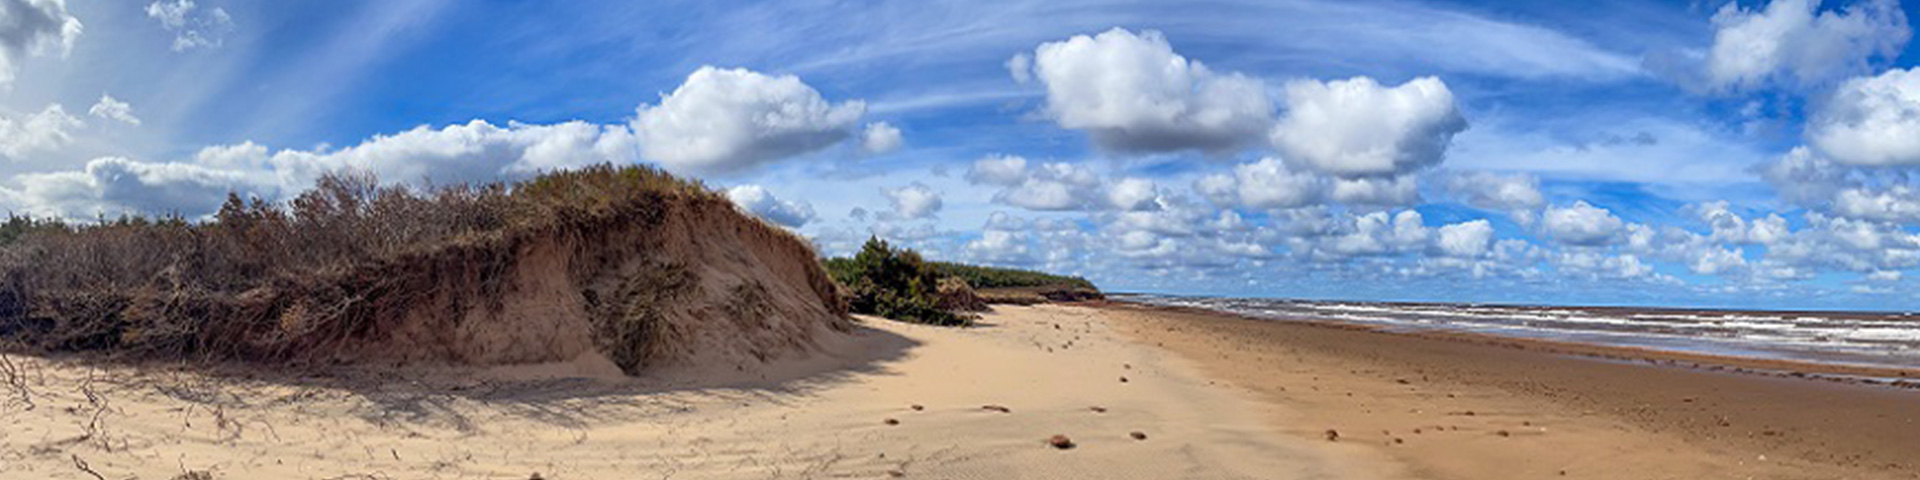 Dunes worn away after Post-tropical storm Fiona